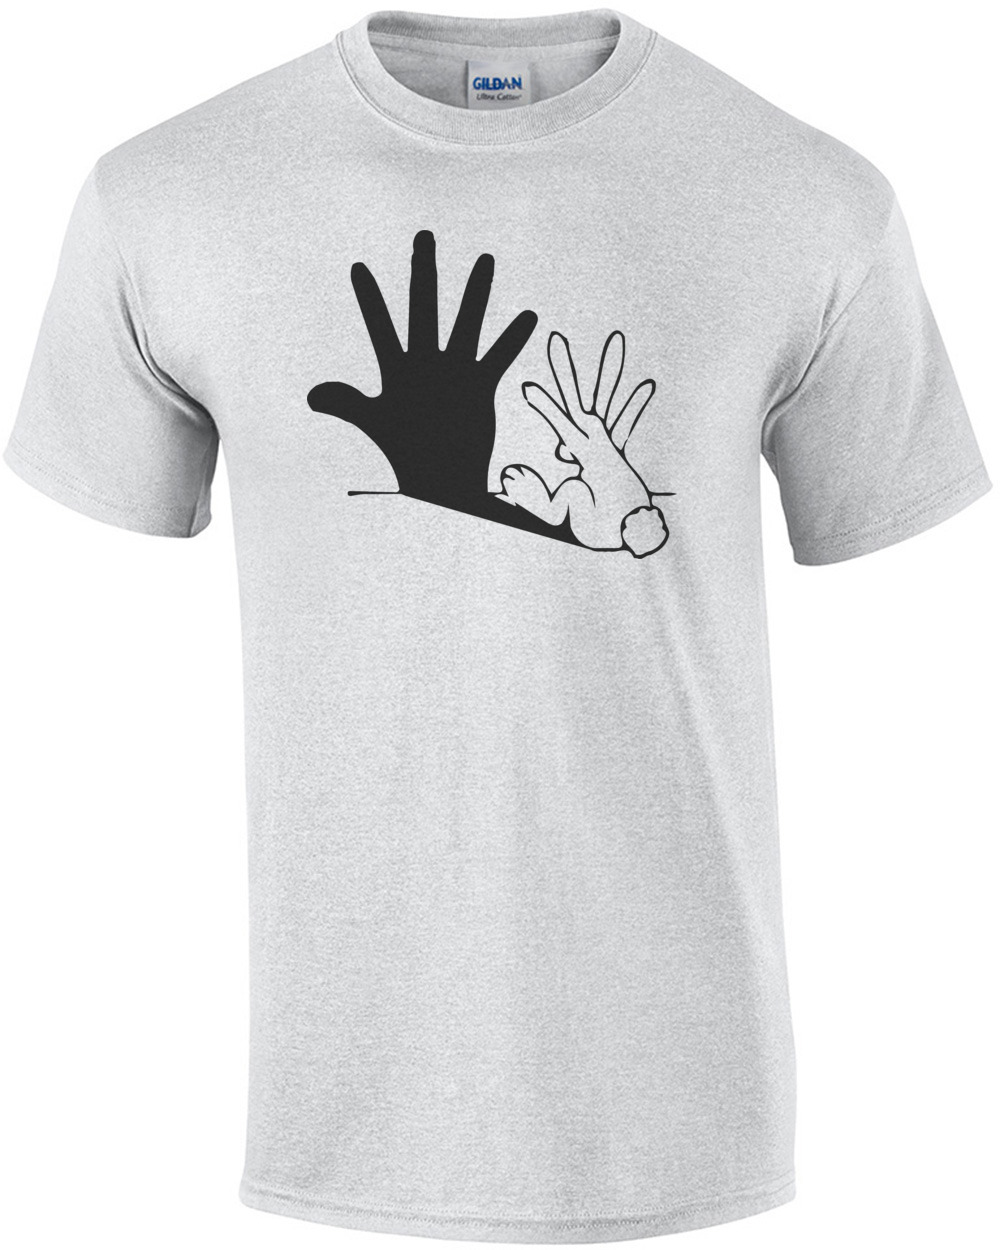 Bunny Shadow Funny Animal T-Shirt shirt